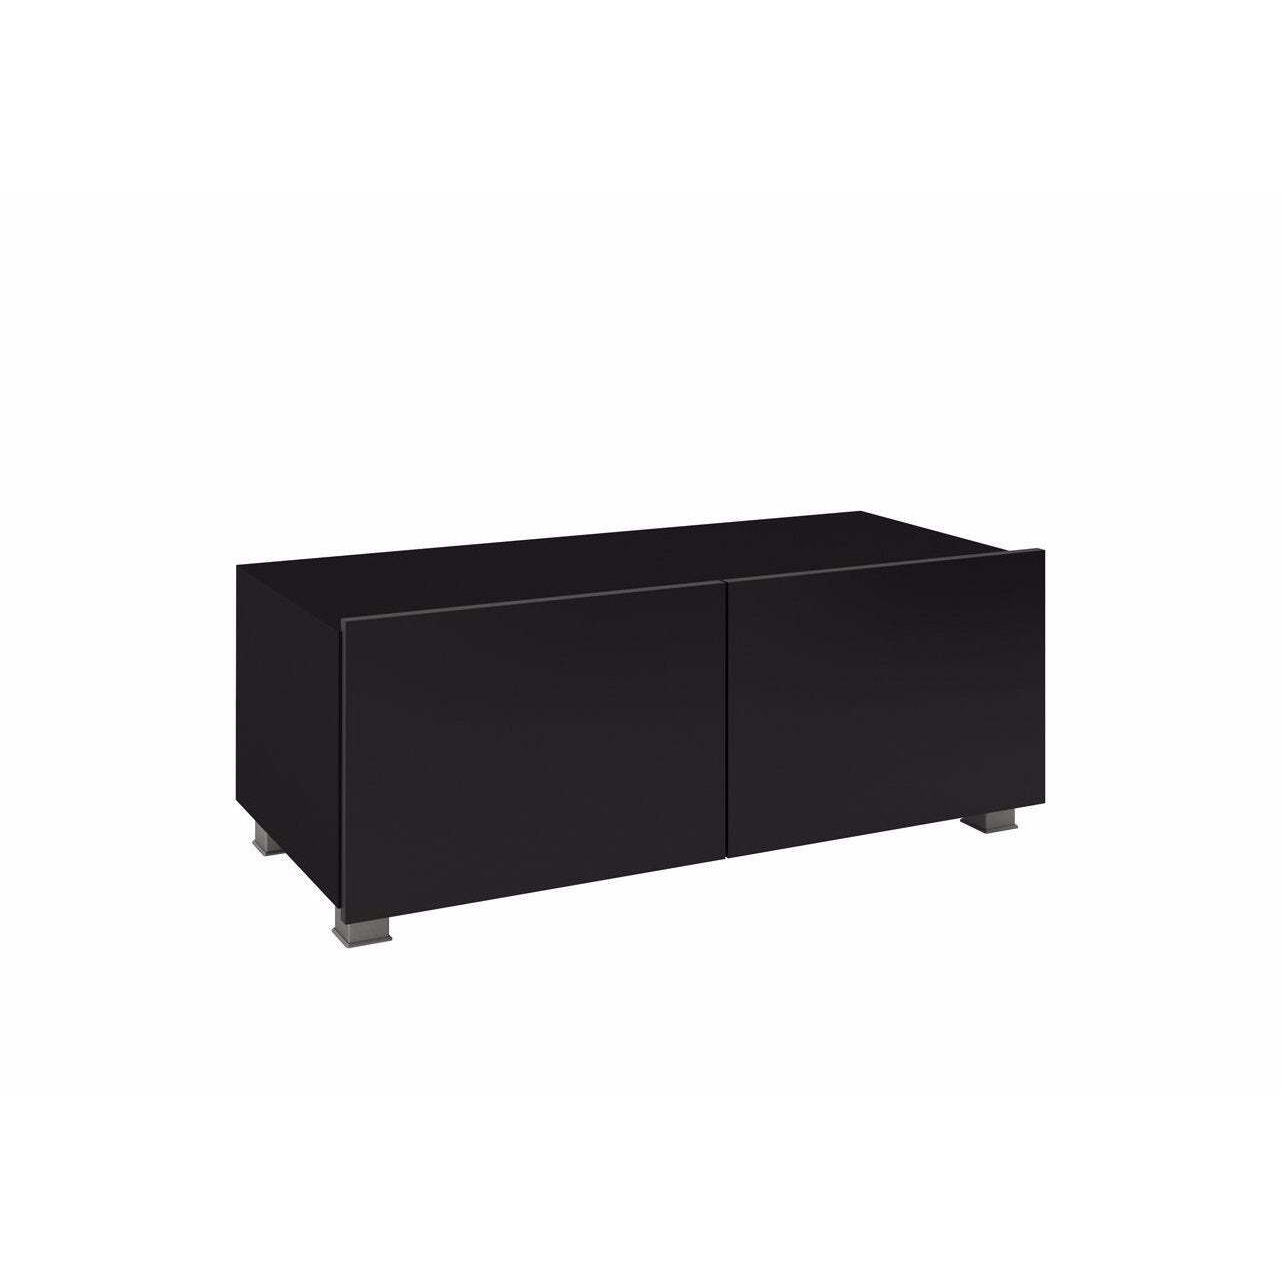 Calabrini TV Cabinet 100cm - Black Gloss 100cm - image 1